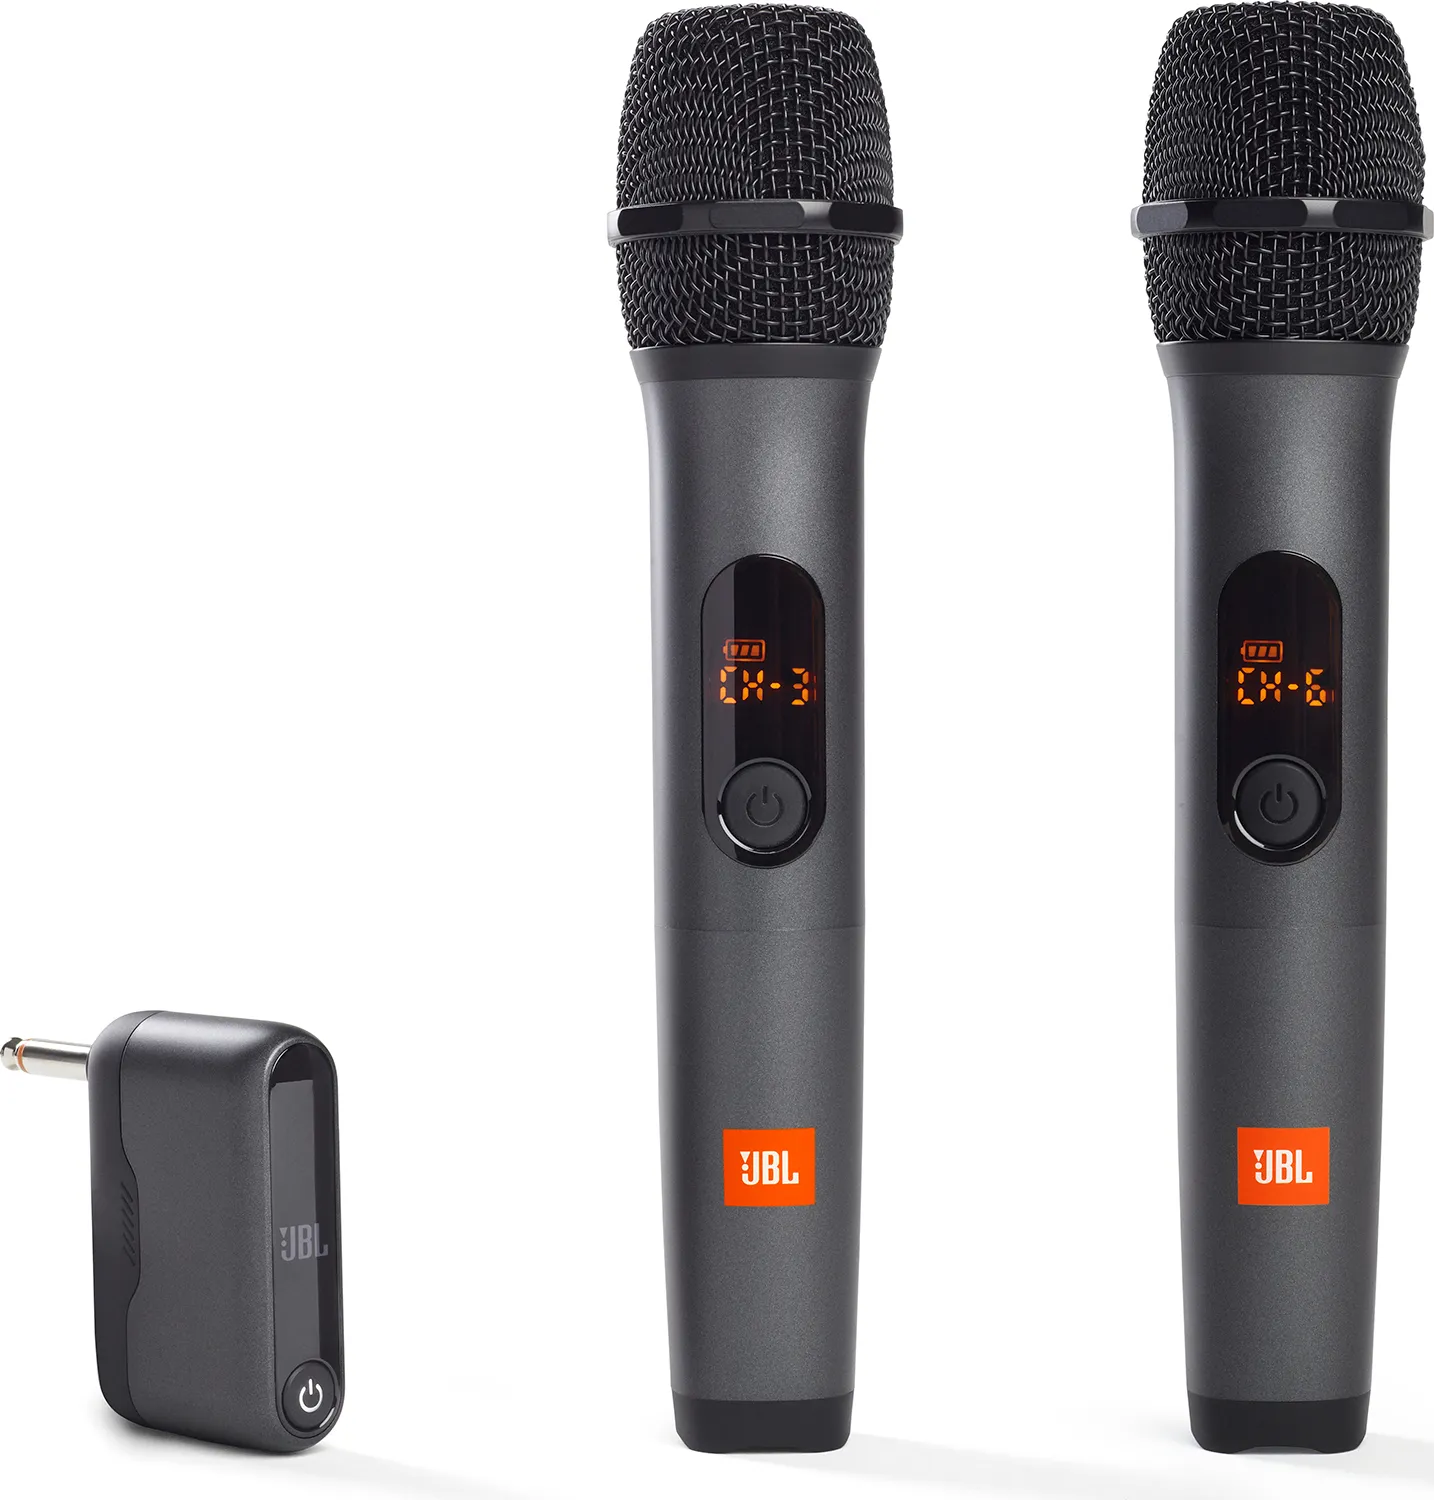 JBL Wireless Microphone0 